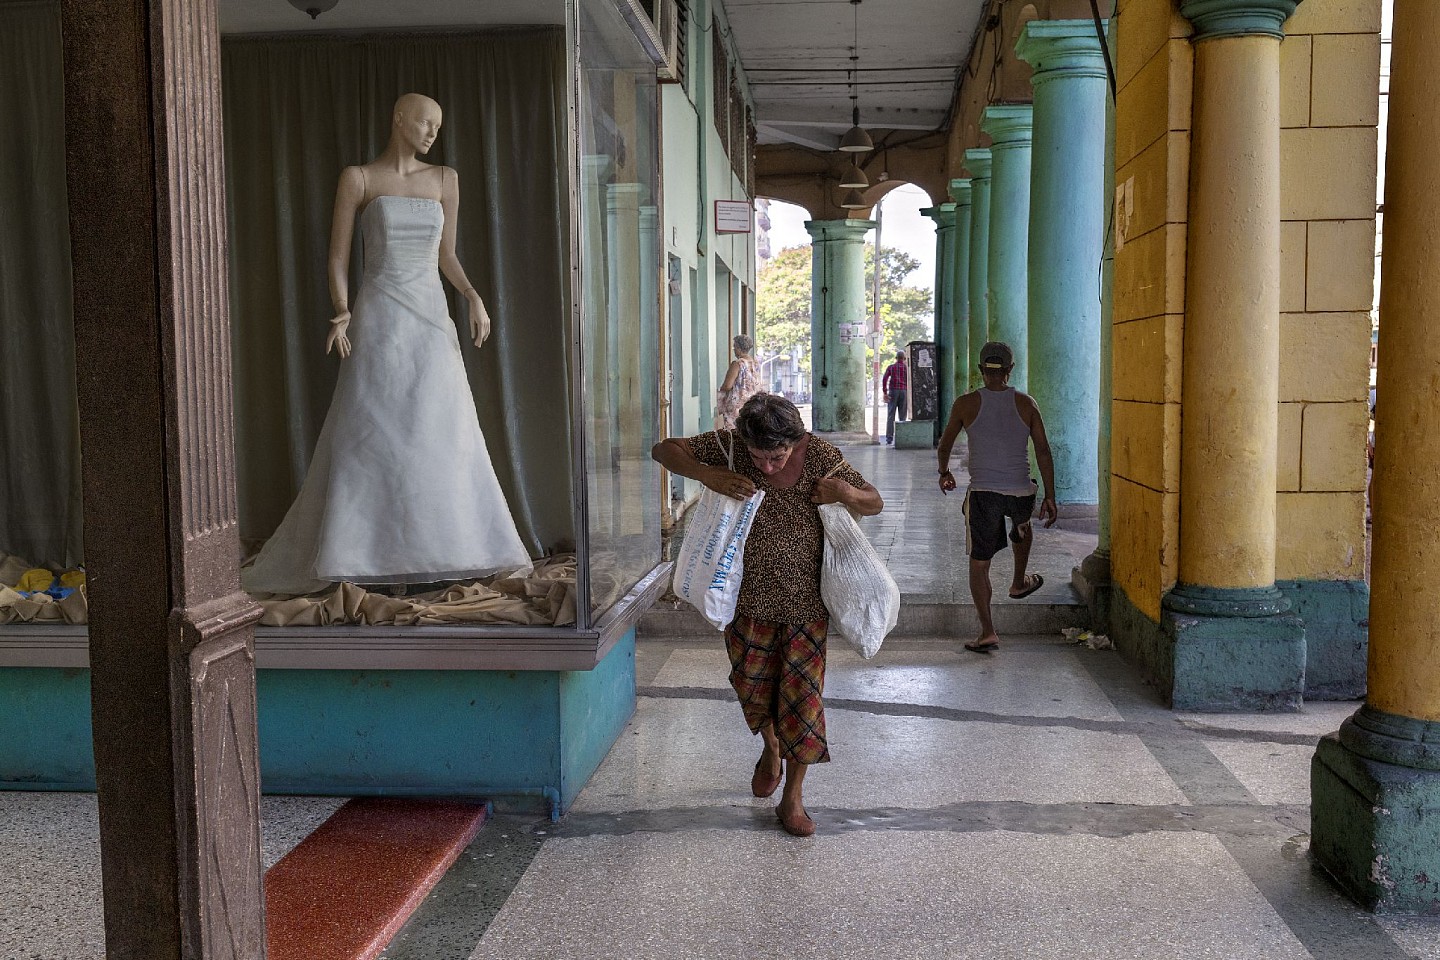 Steve McCurry, Woman Walks by Wedding Dress, 2019
FujiFlex Crystal Archive Print
Price/Size on request